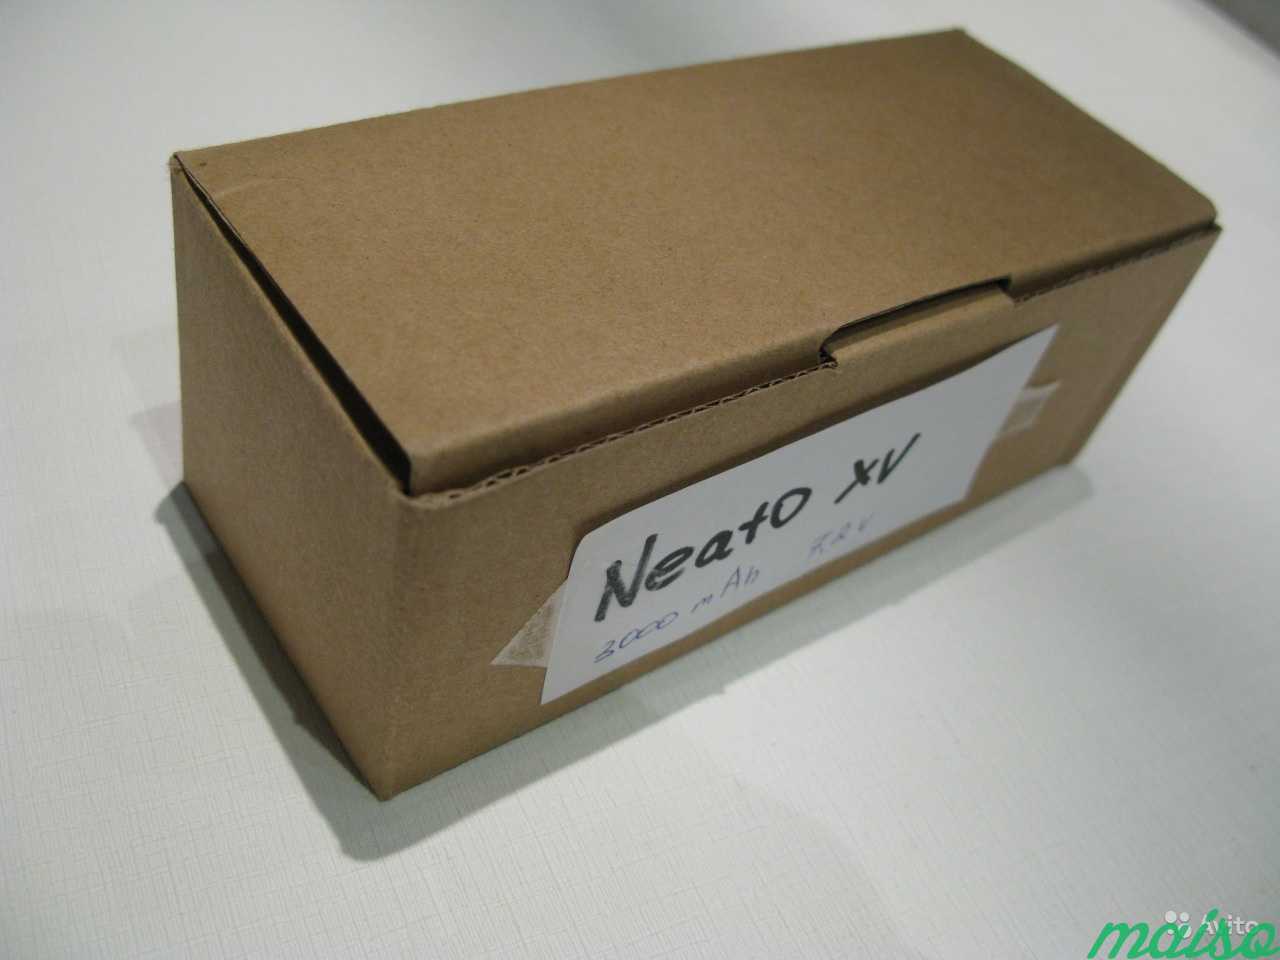 Аккумулятор для Neato XV в Москве. Фото 5